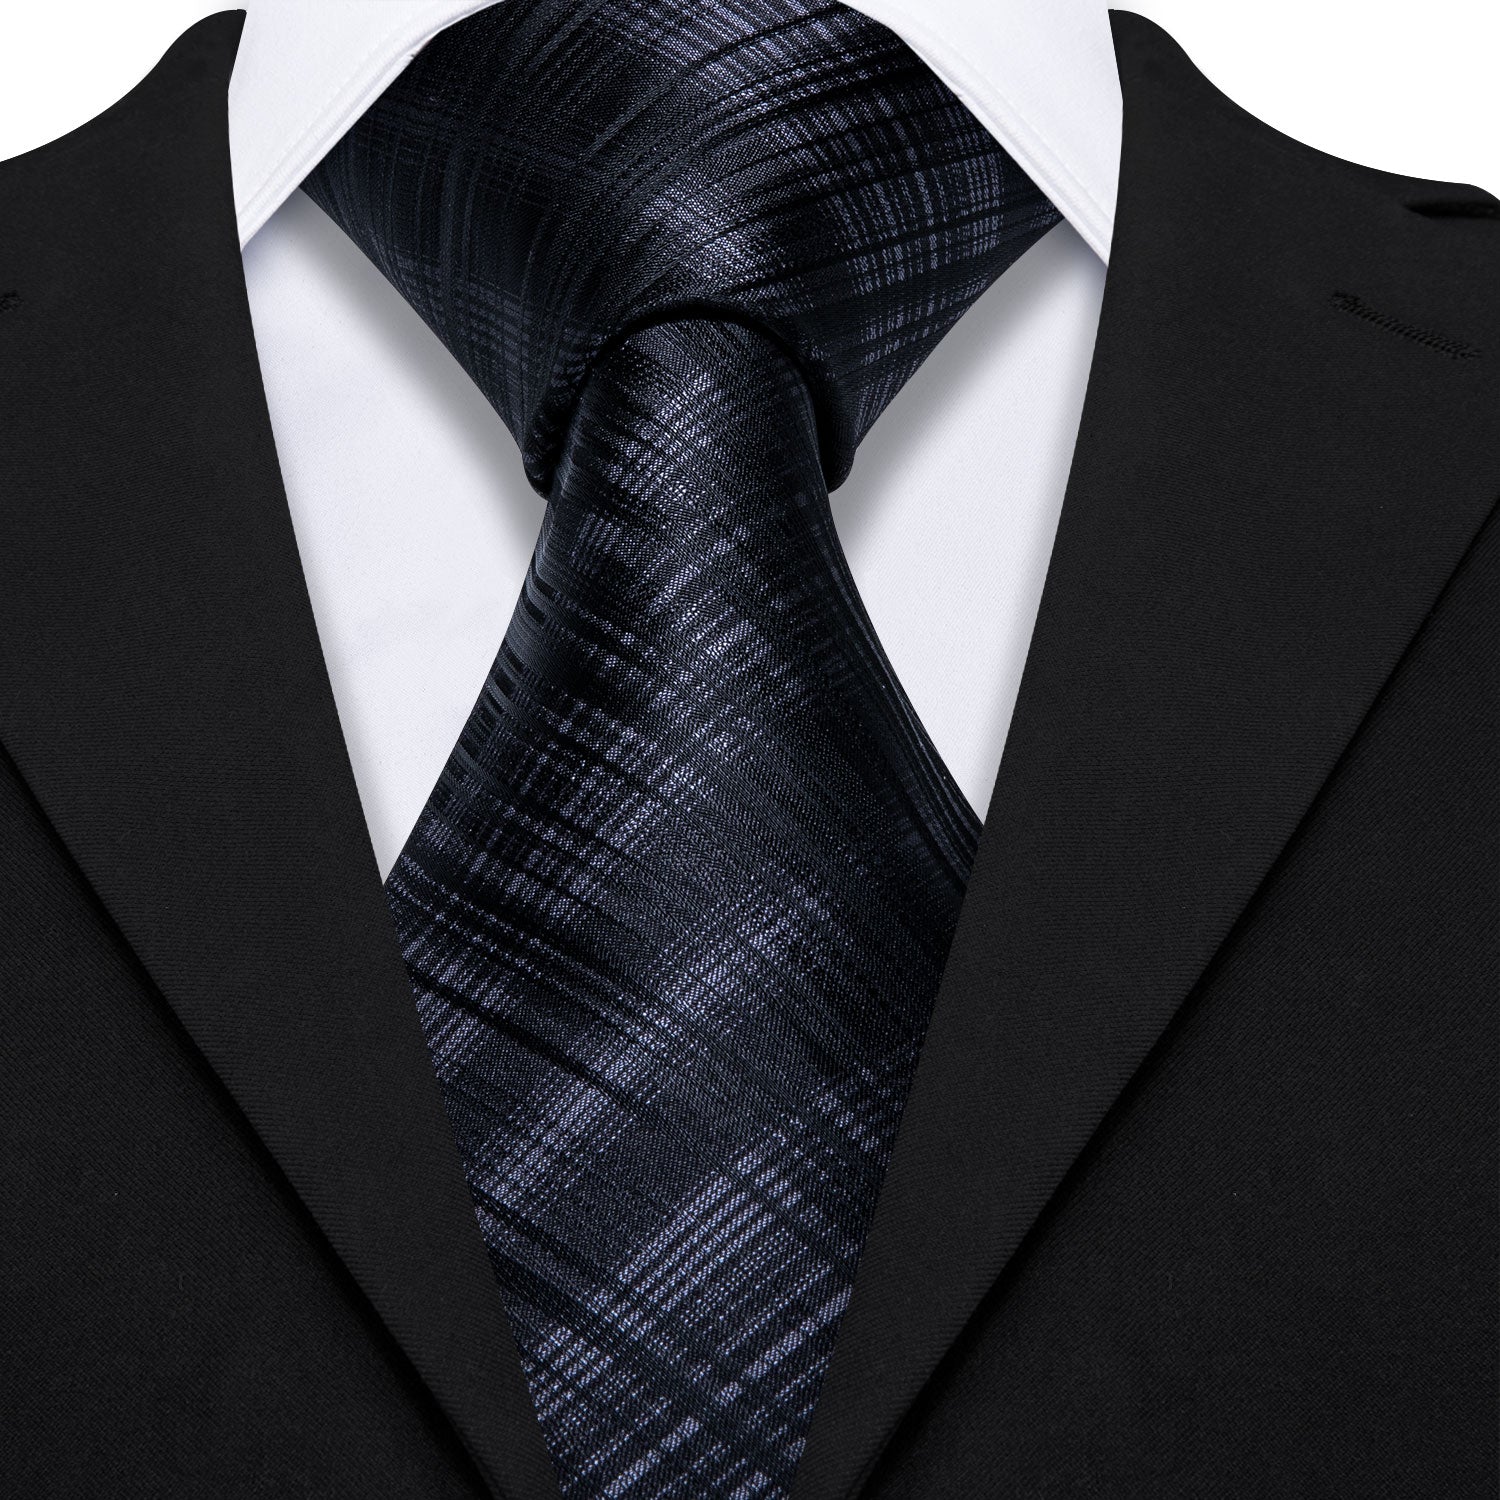 High Gloss Black and Gray Stripe Tie Pocket Square Cufflinks Set